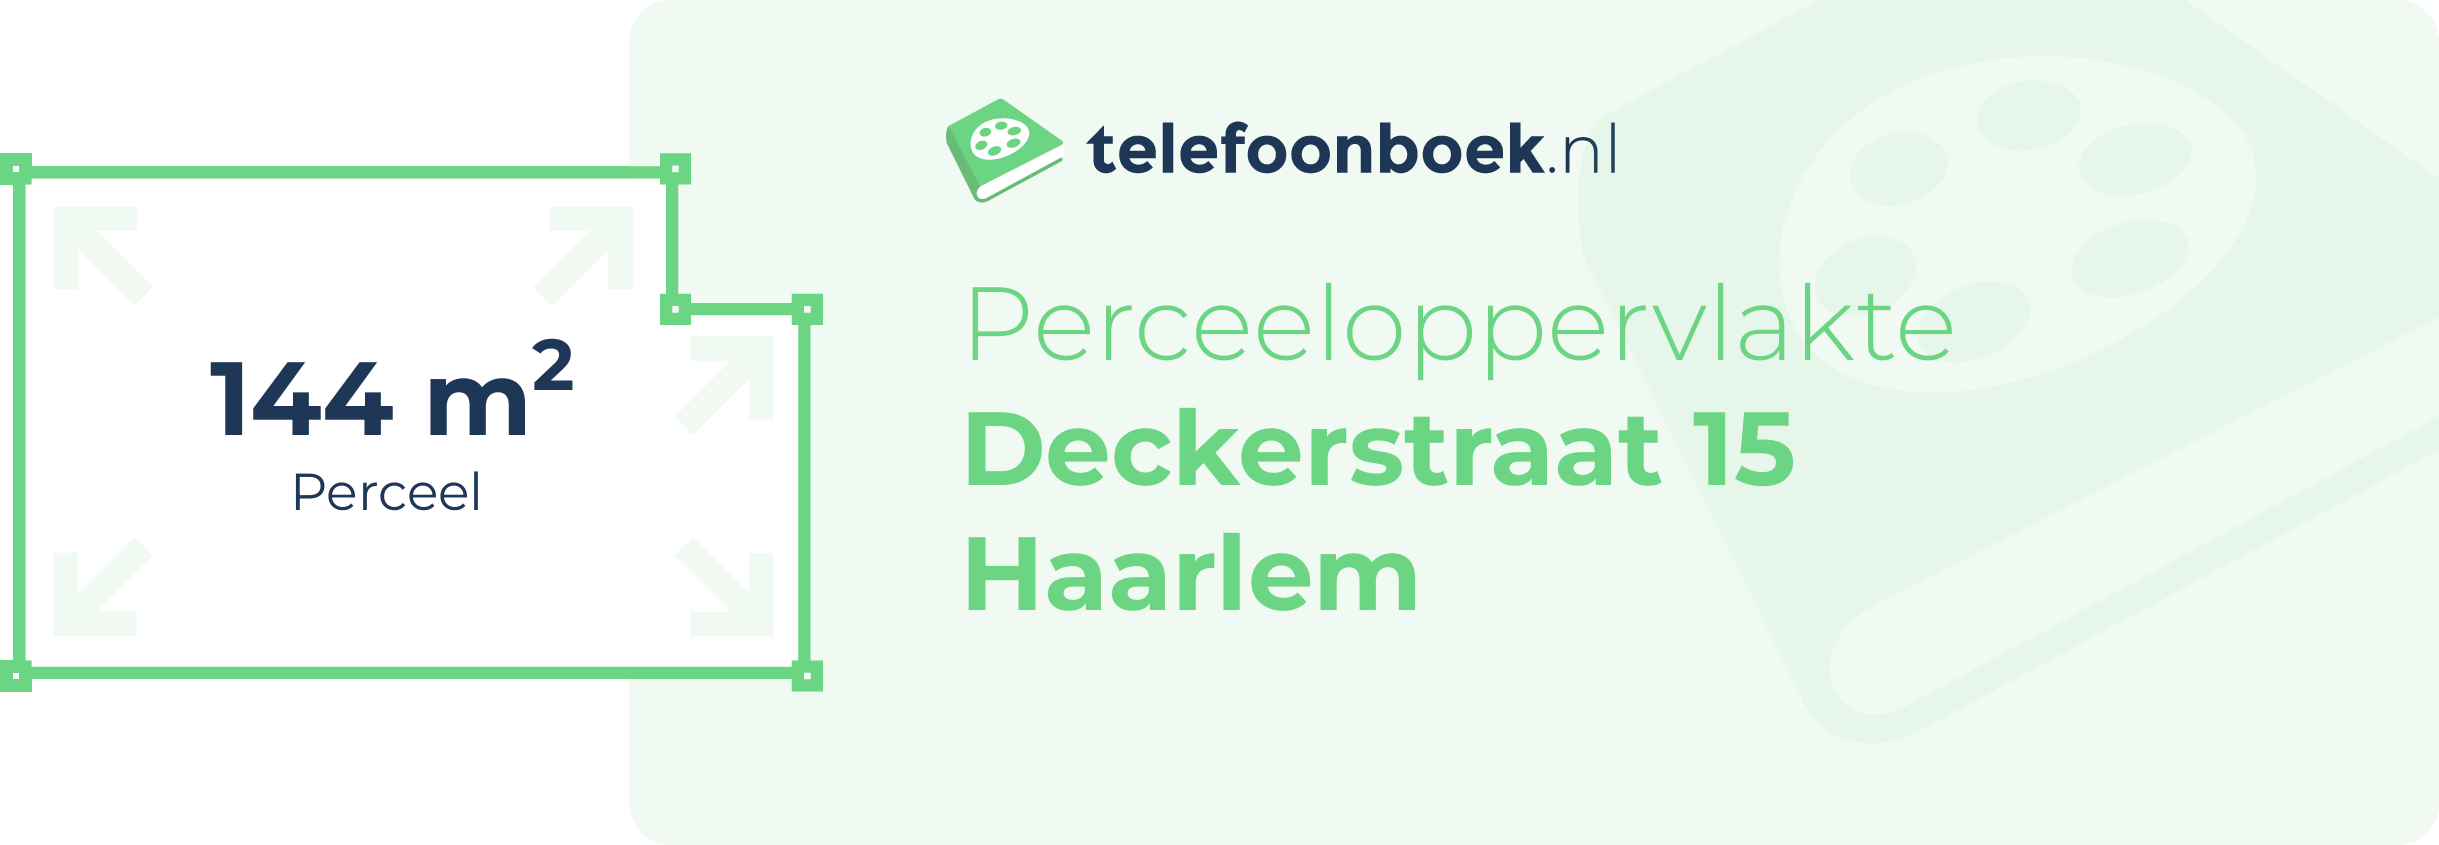 Perceeloppervlakte Deckerstraat 15 Haarlem